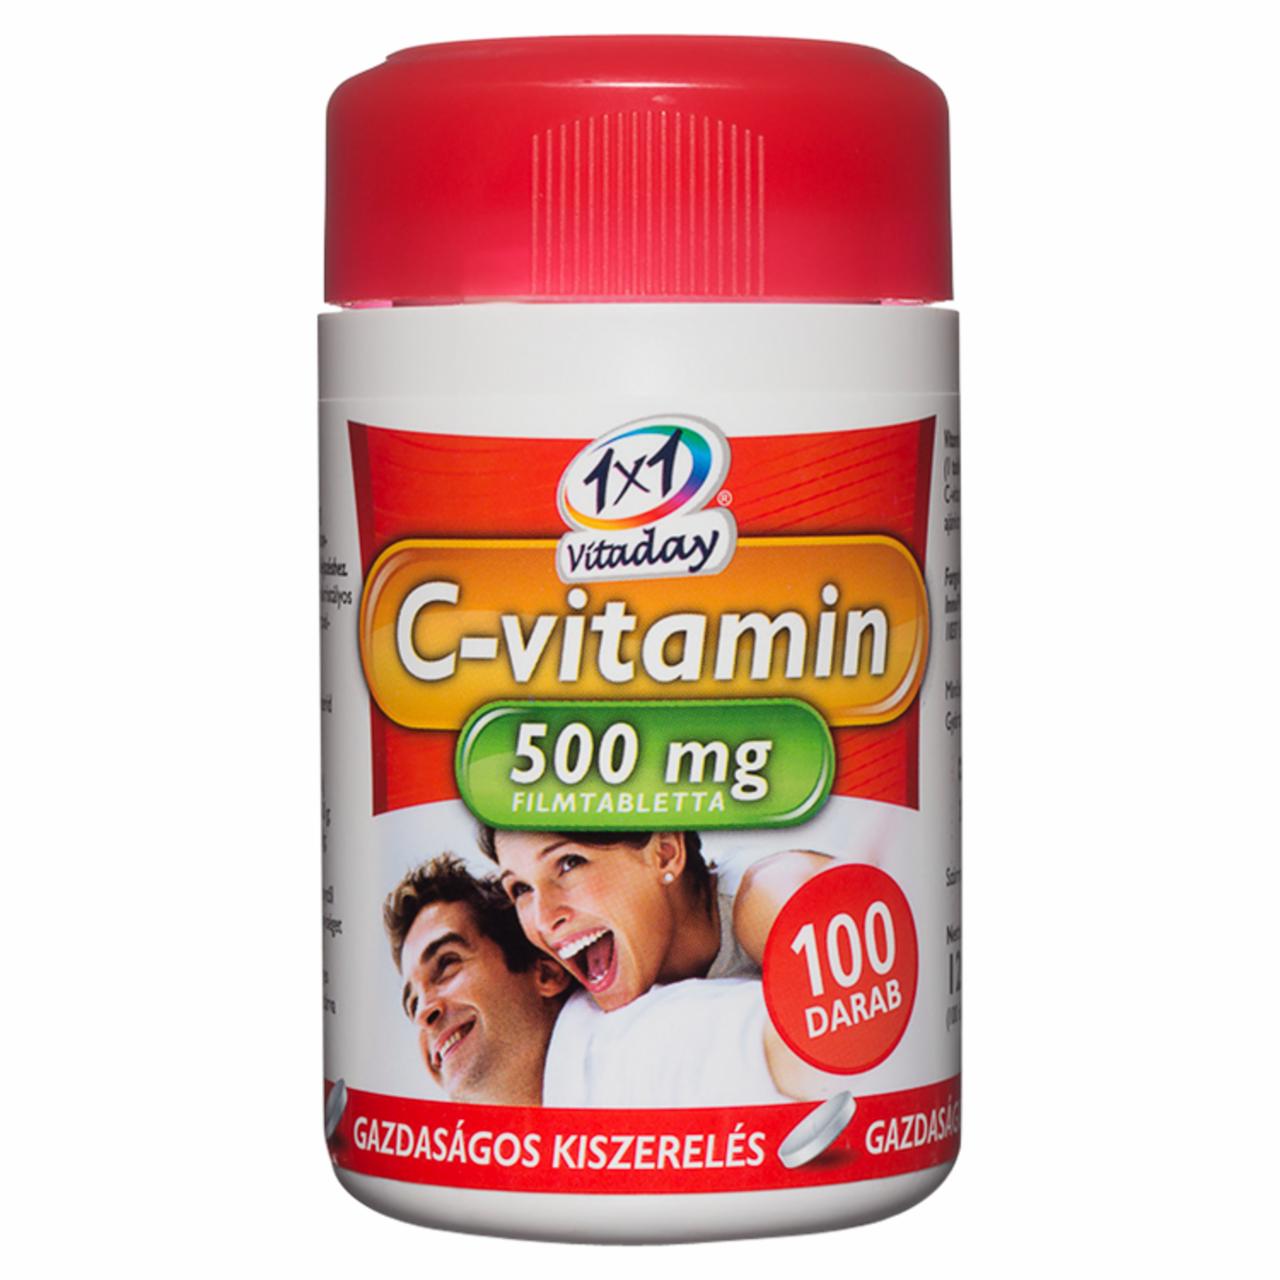 Képek - 1x1 Vitaday C-vitamin 500 mg étrend-kiegészítő filmtabletta 100 db 120 g